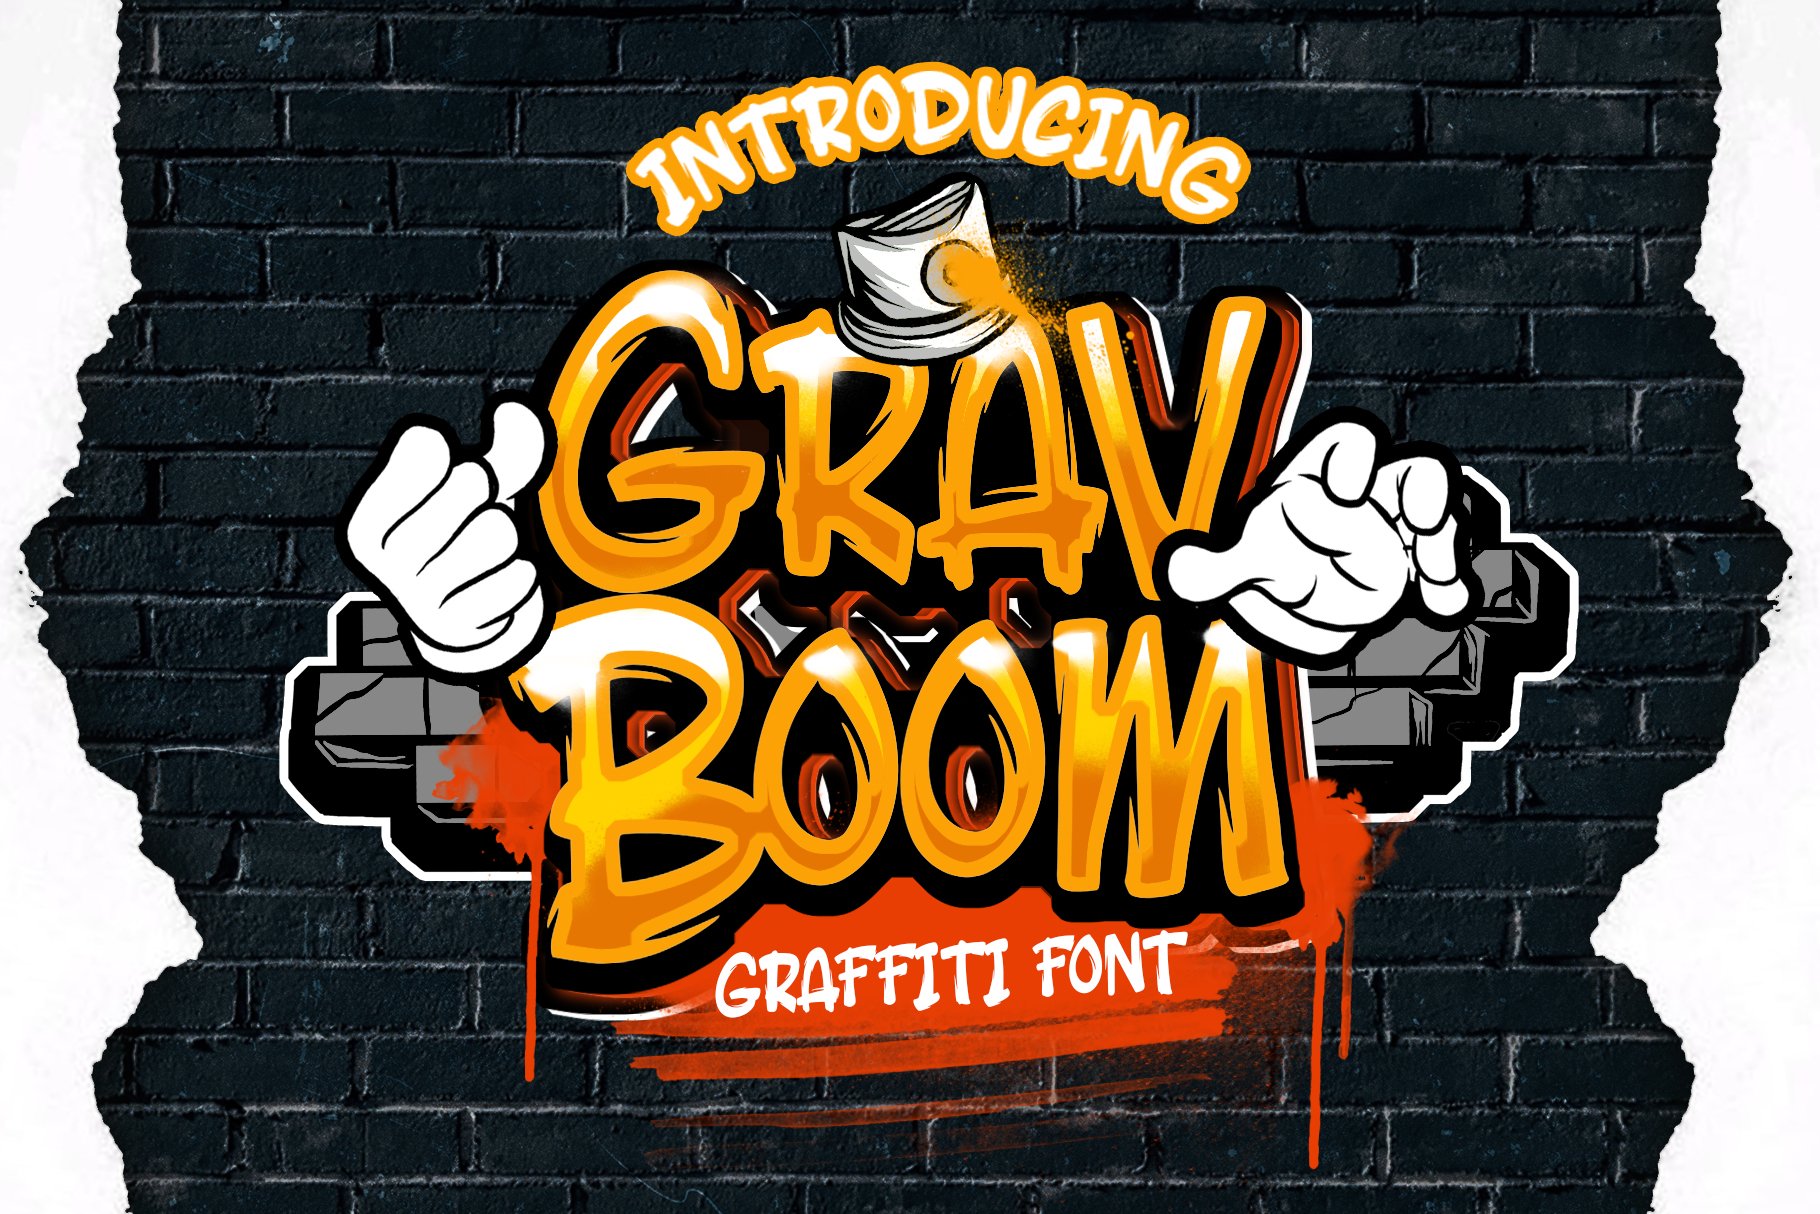 GravBOOM GRAFFITI FONT cover image.